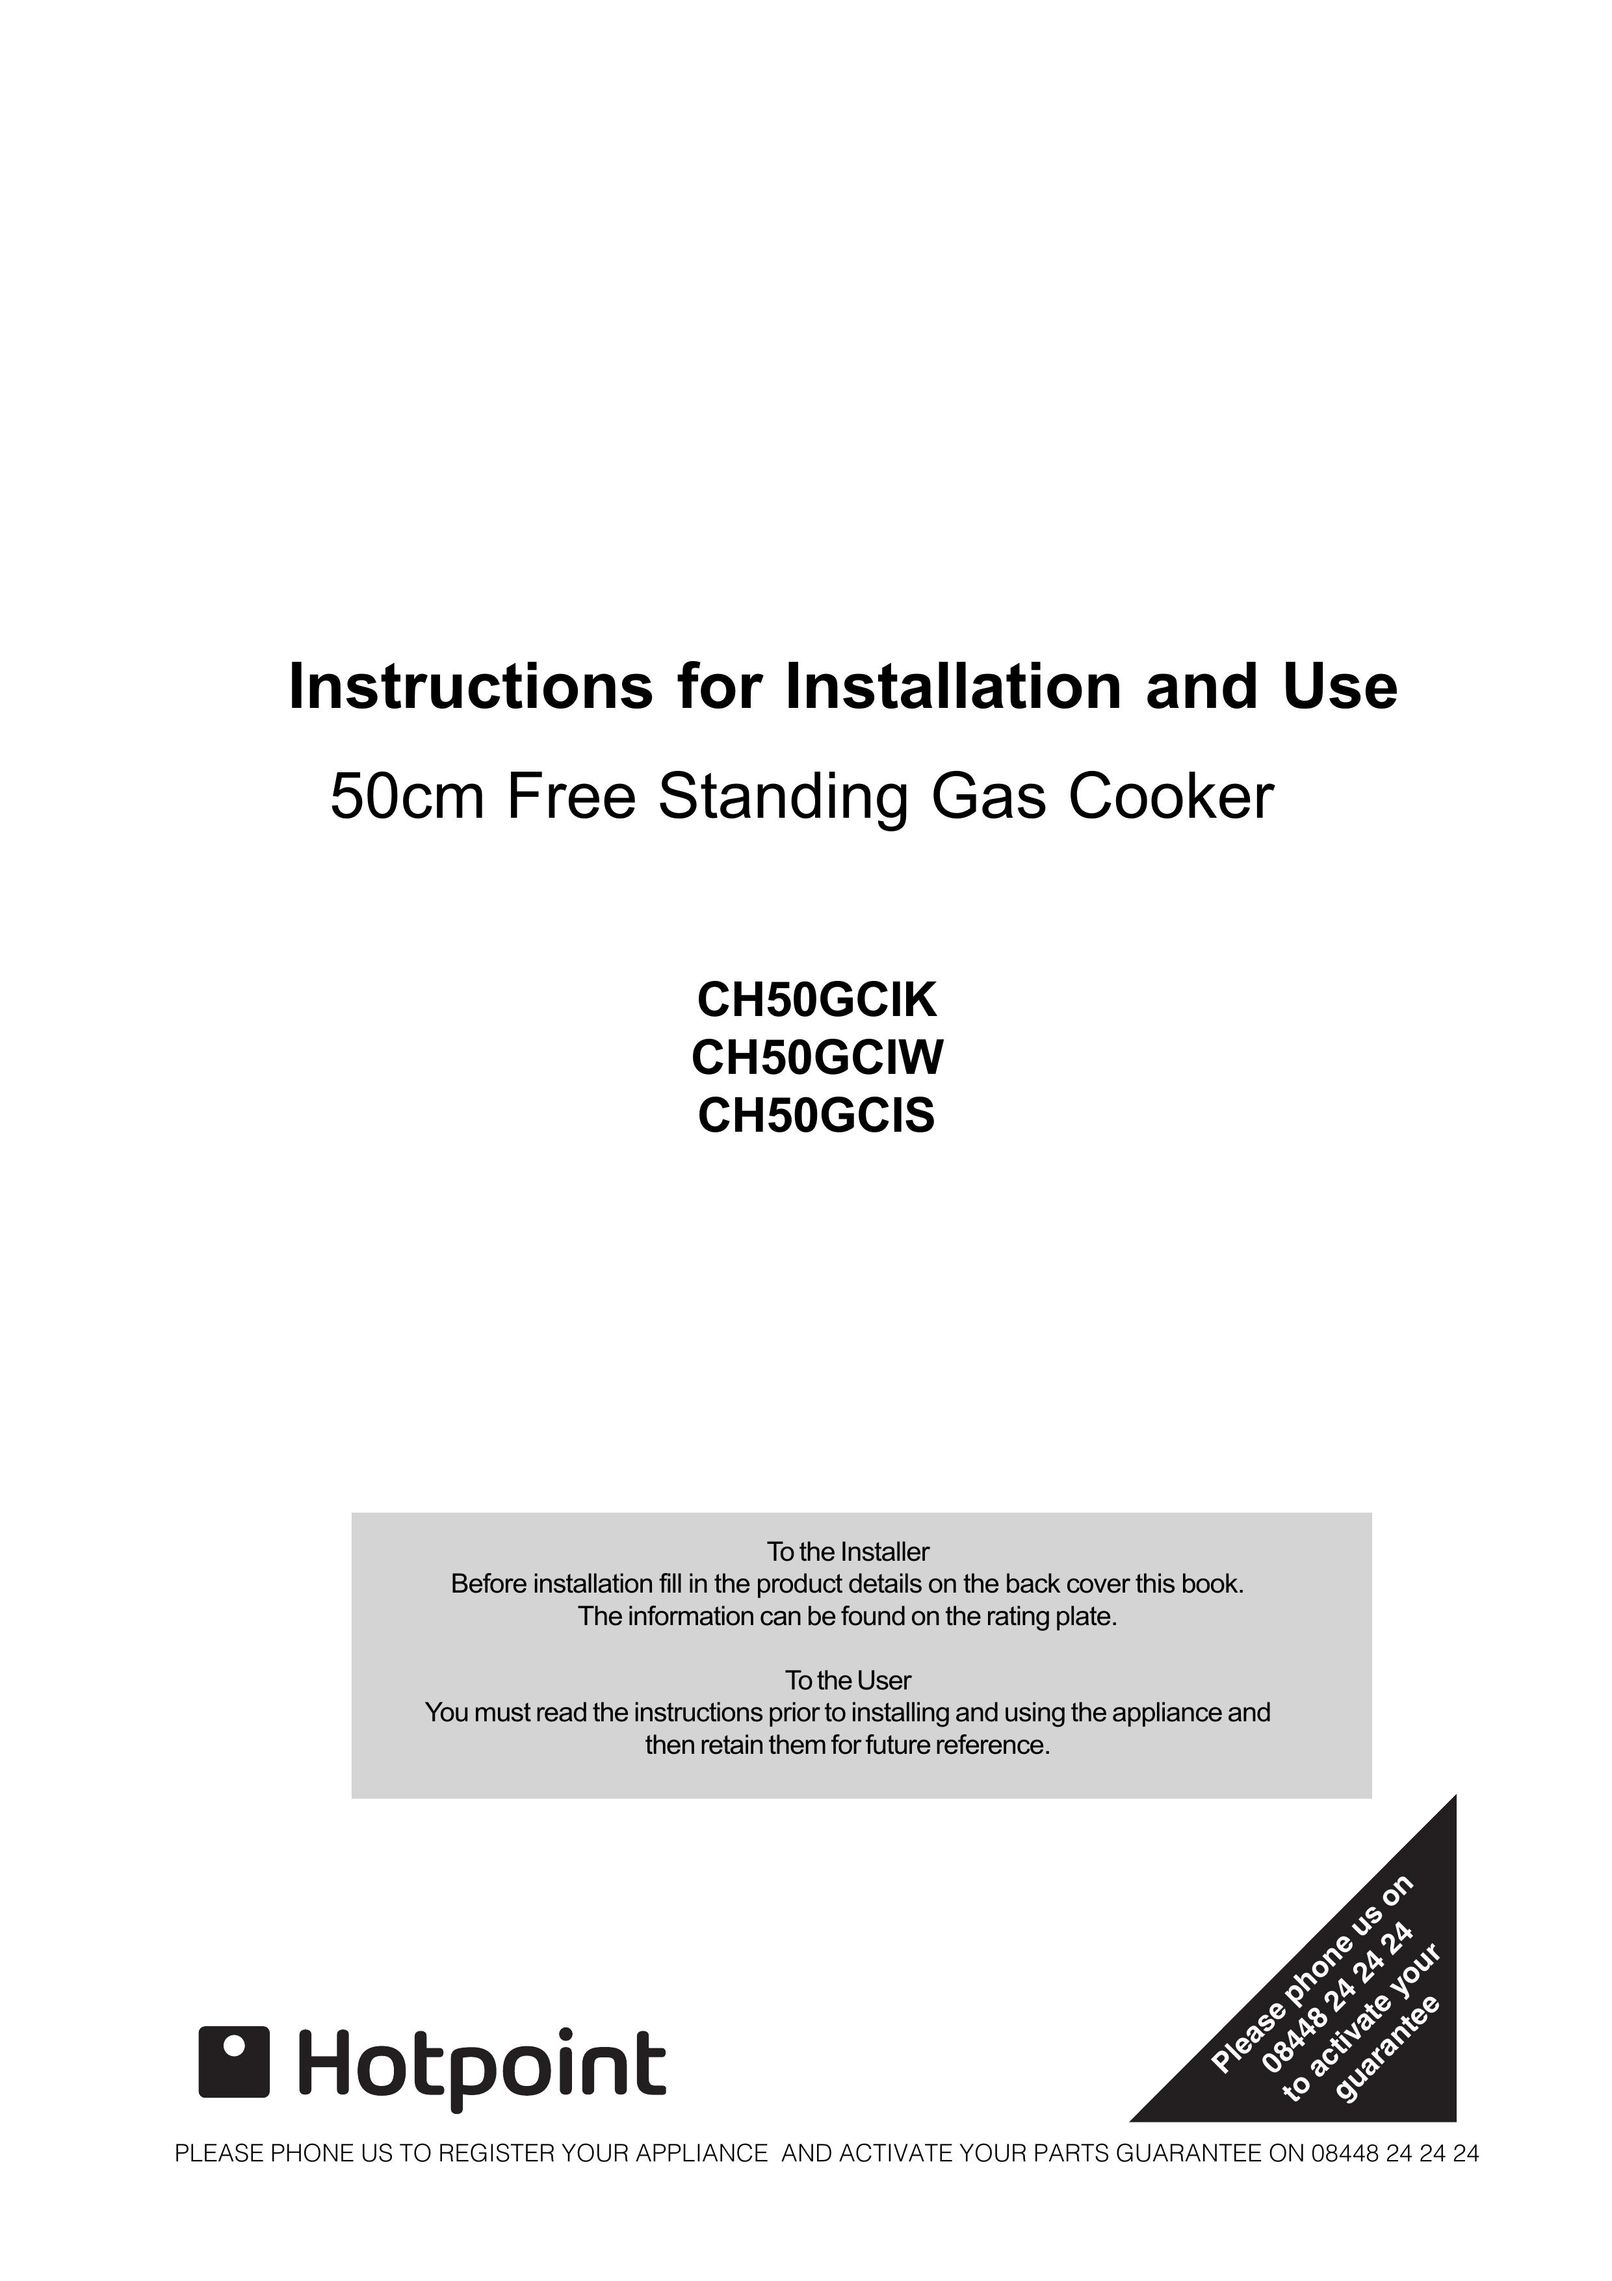 Hotpoint CH50GCIK Stove User Manual